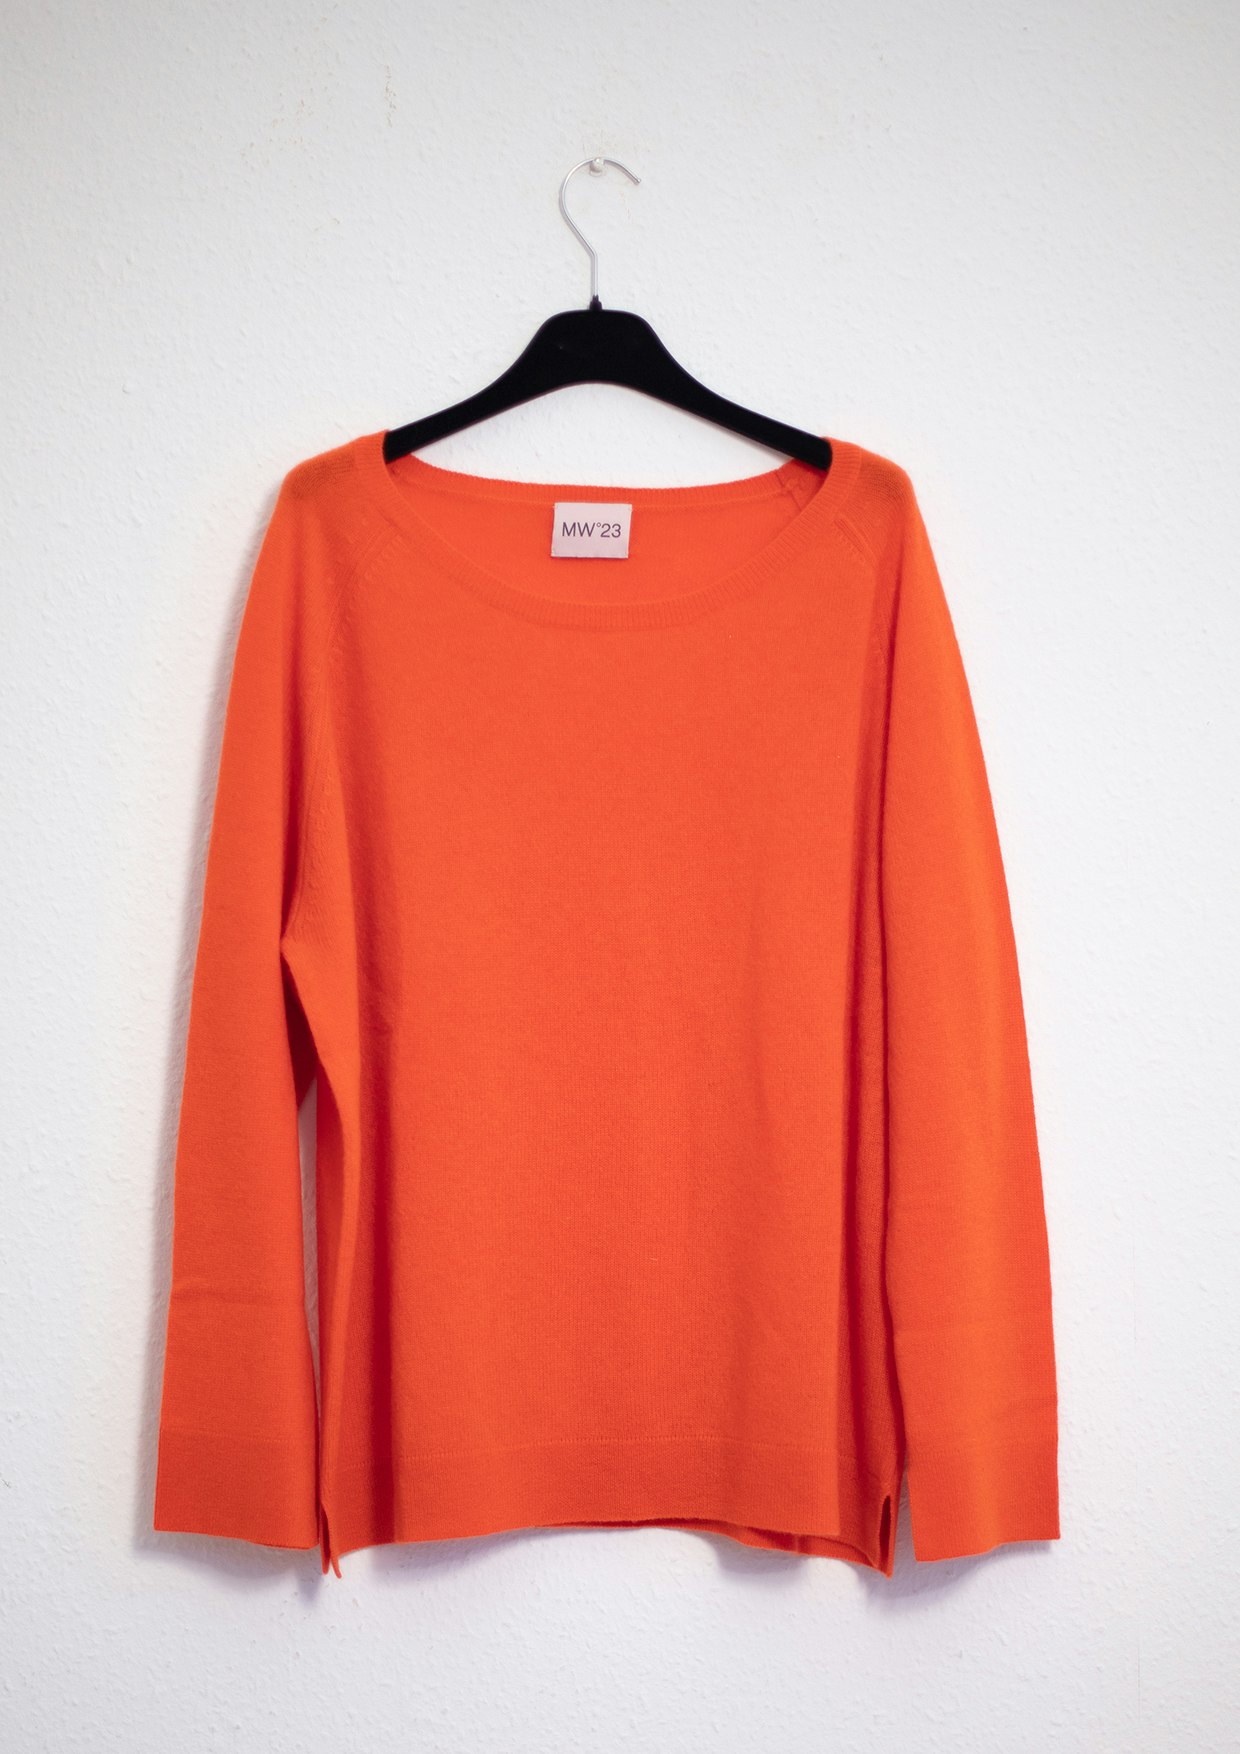 Stickad tröja i ull/cashmere från MW23 i vårens färg orange.